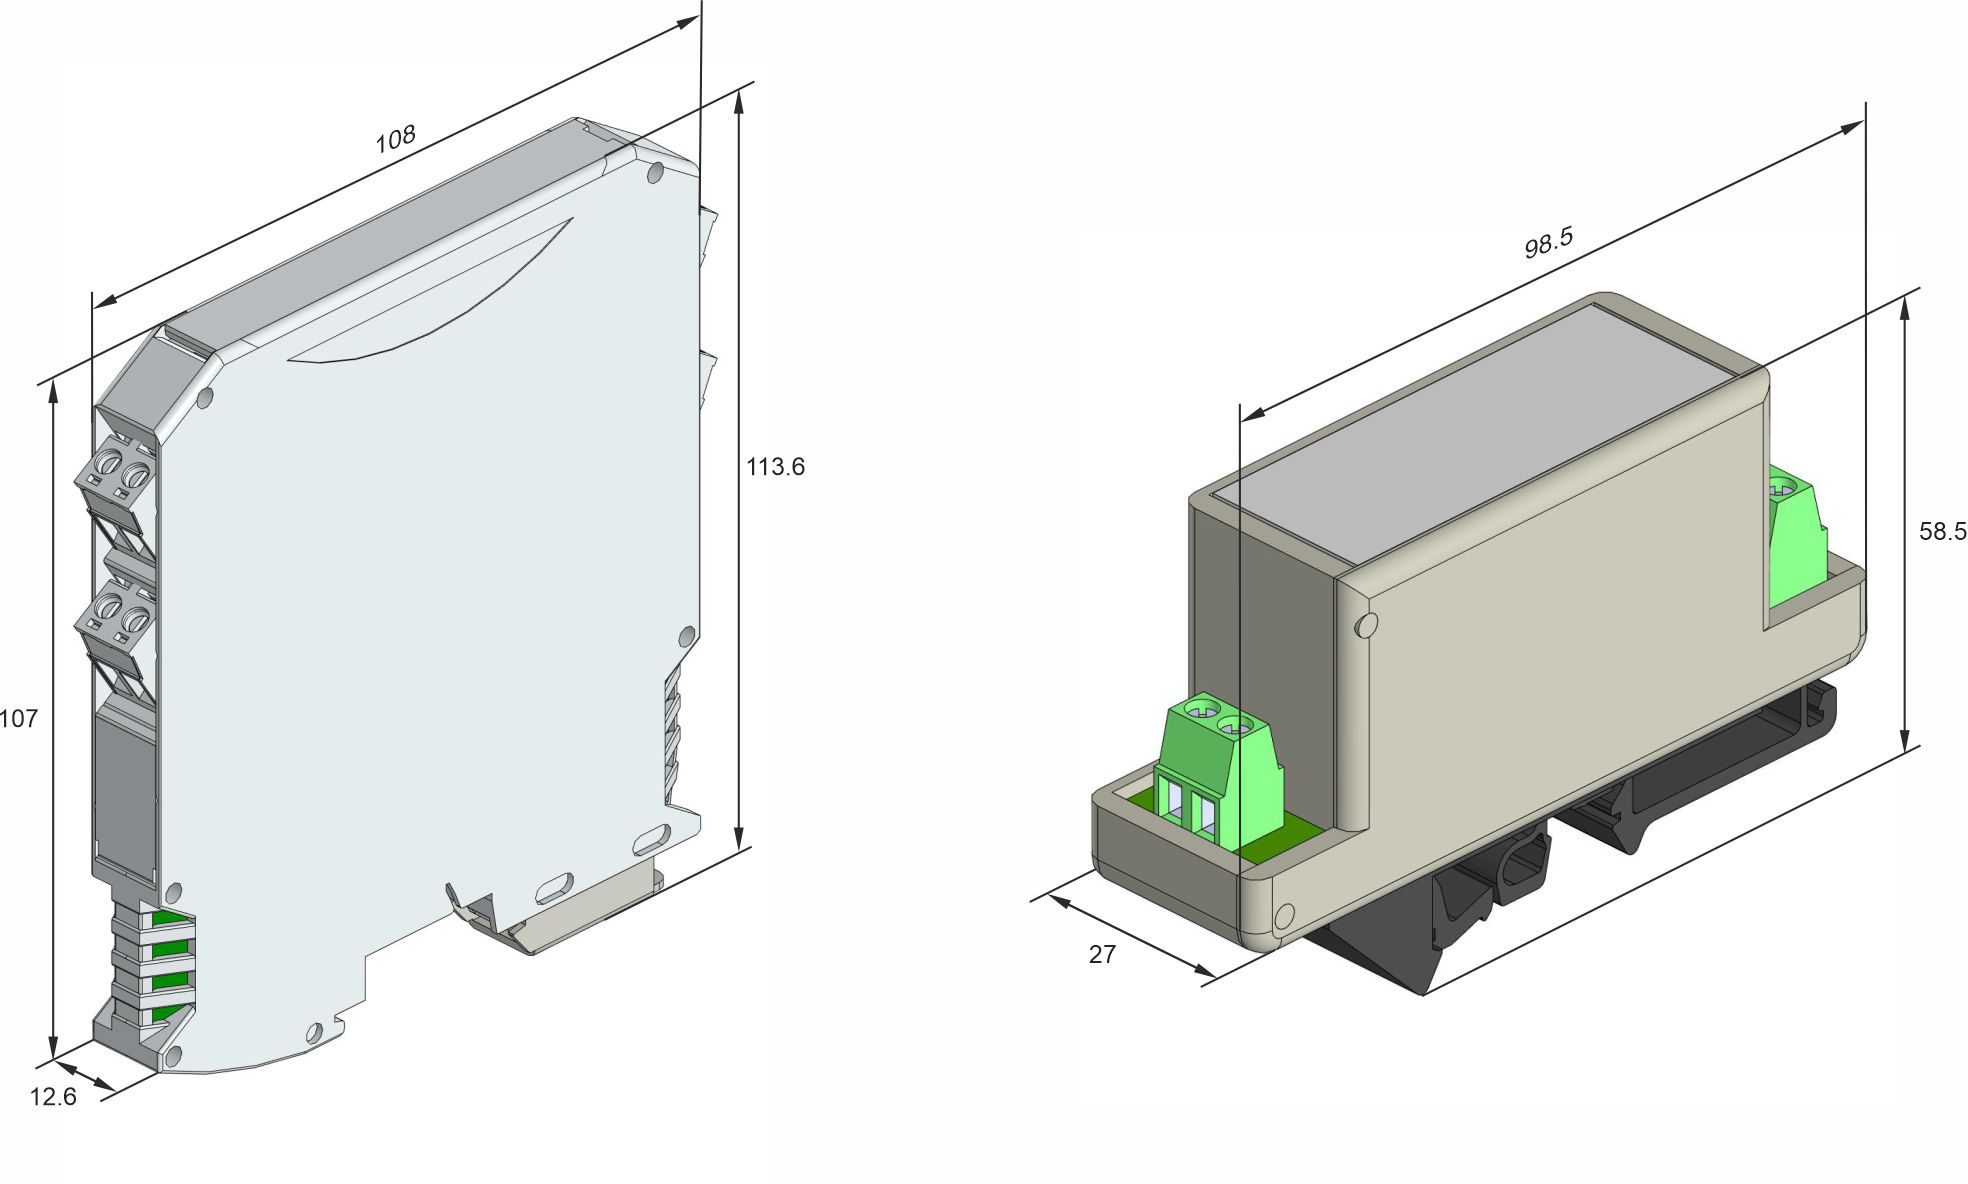 Design of TIK-CNV converters